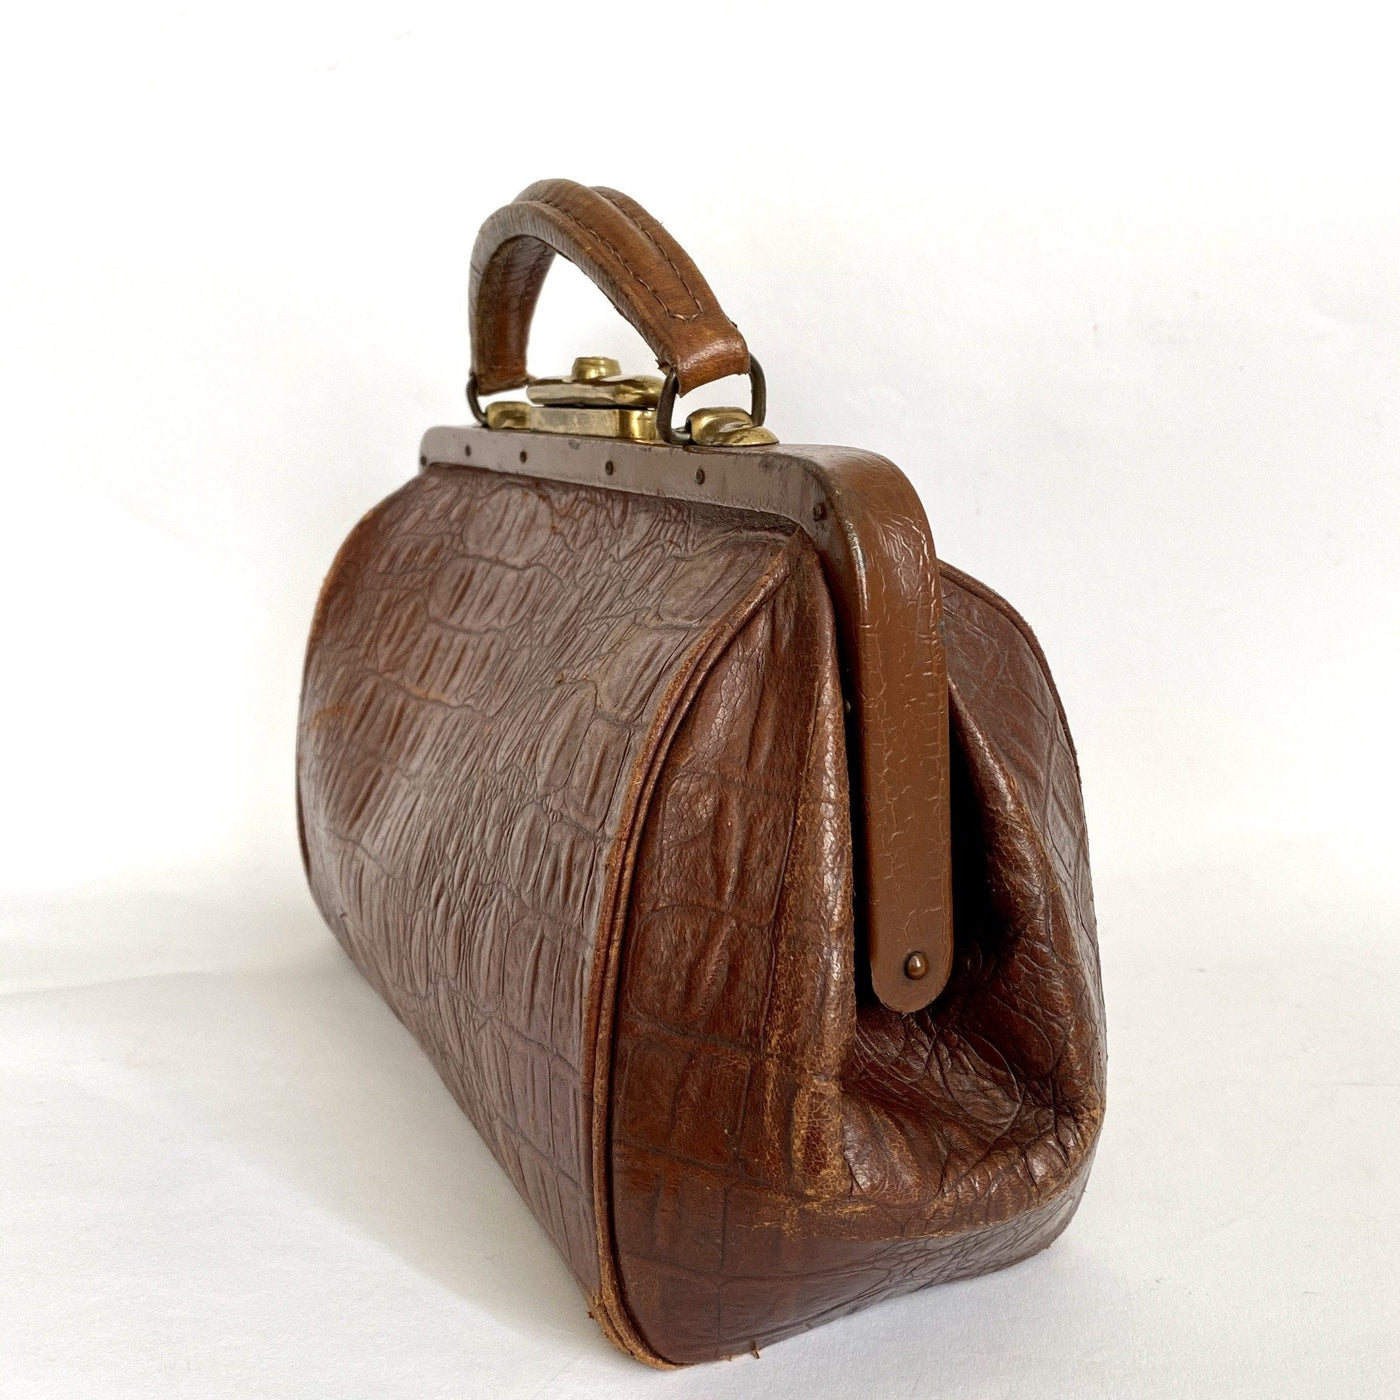 Are Brahmin handbags made of real crocodile leather? - Quora